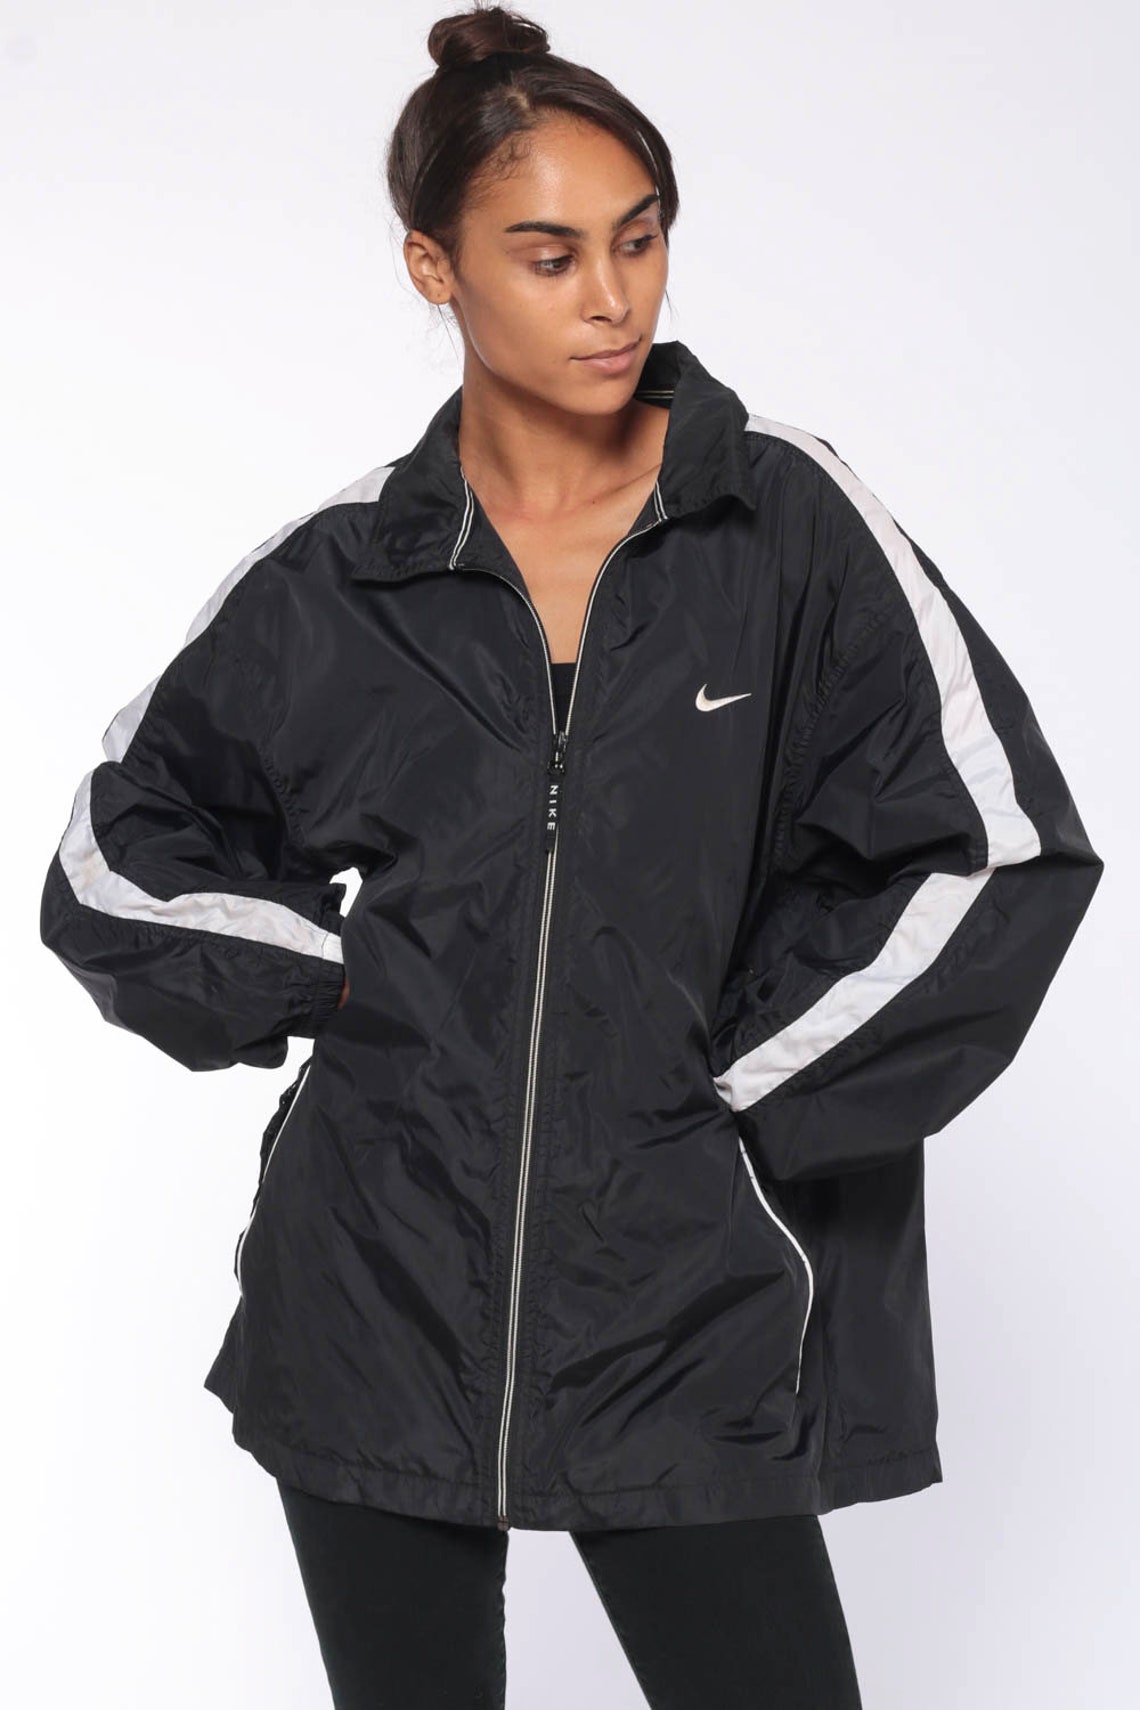 Black Nike Jacket L 90s Windbreaker Jacket Track Jacket | Etsy